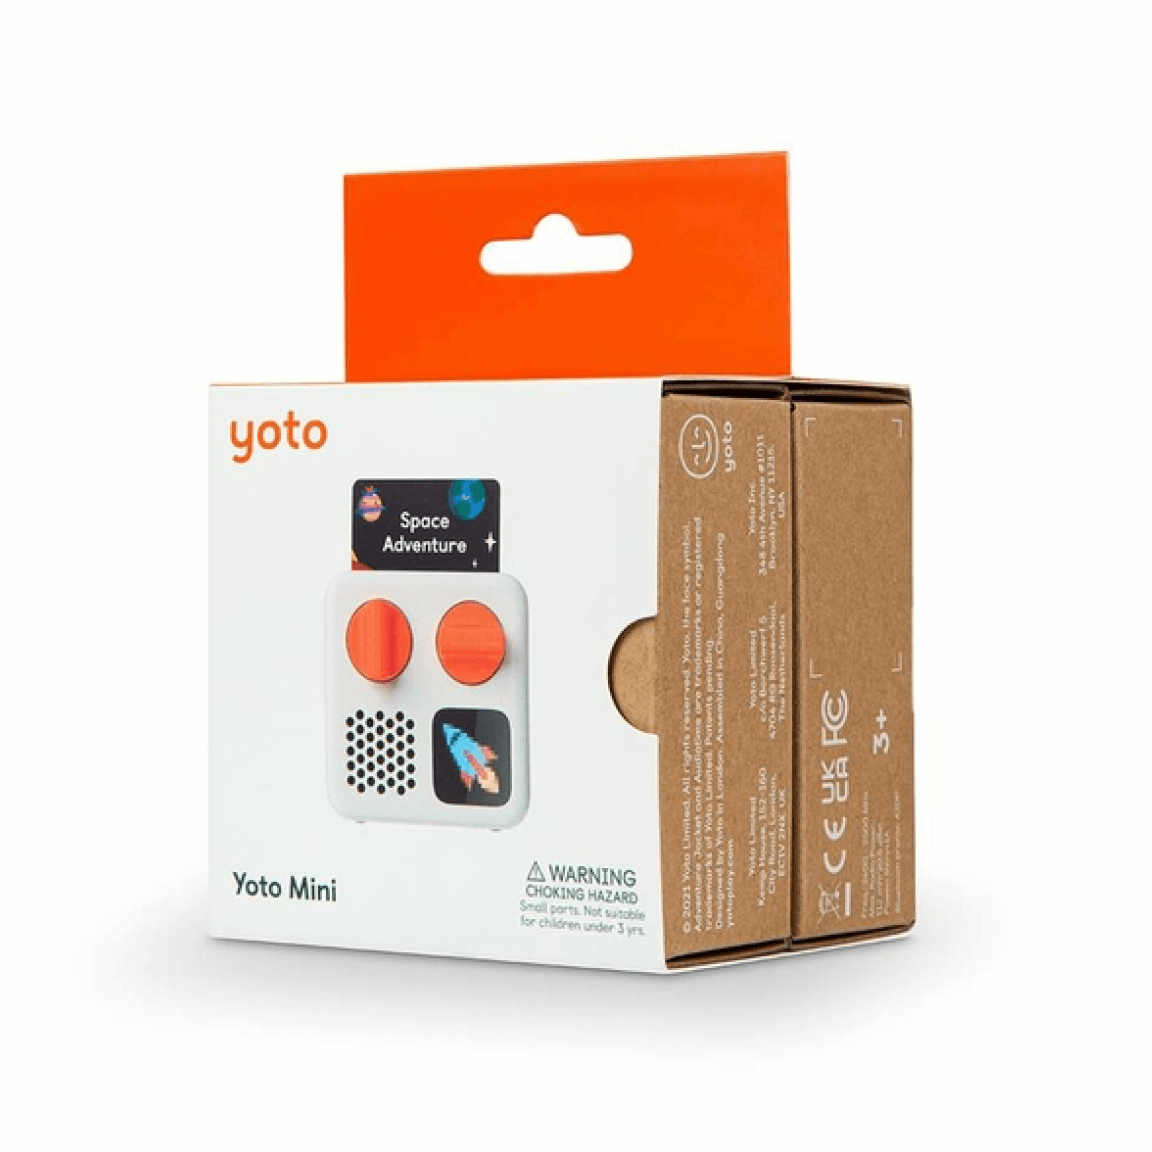 Yoto Mini in packaging